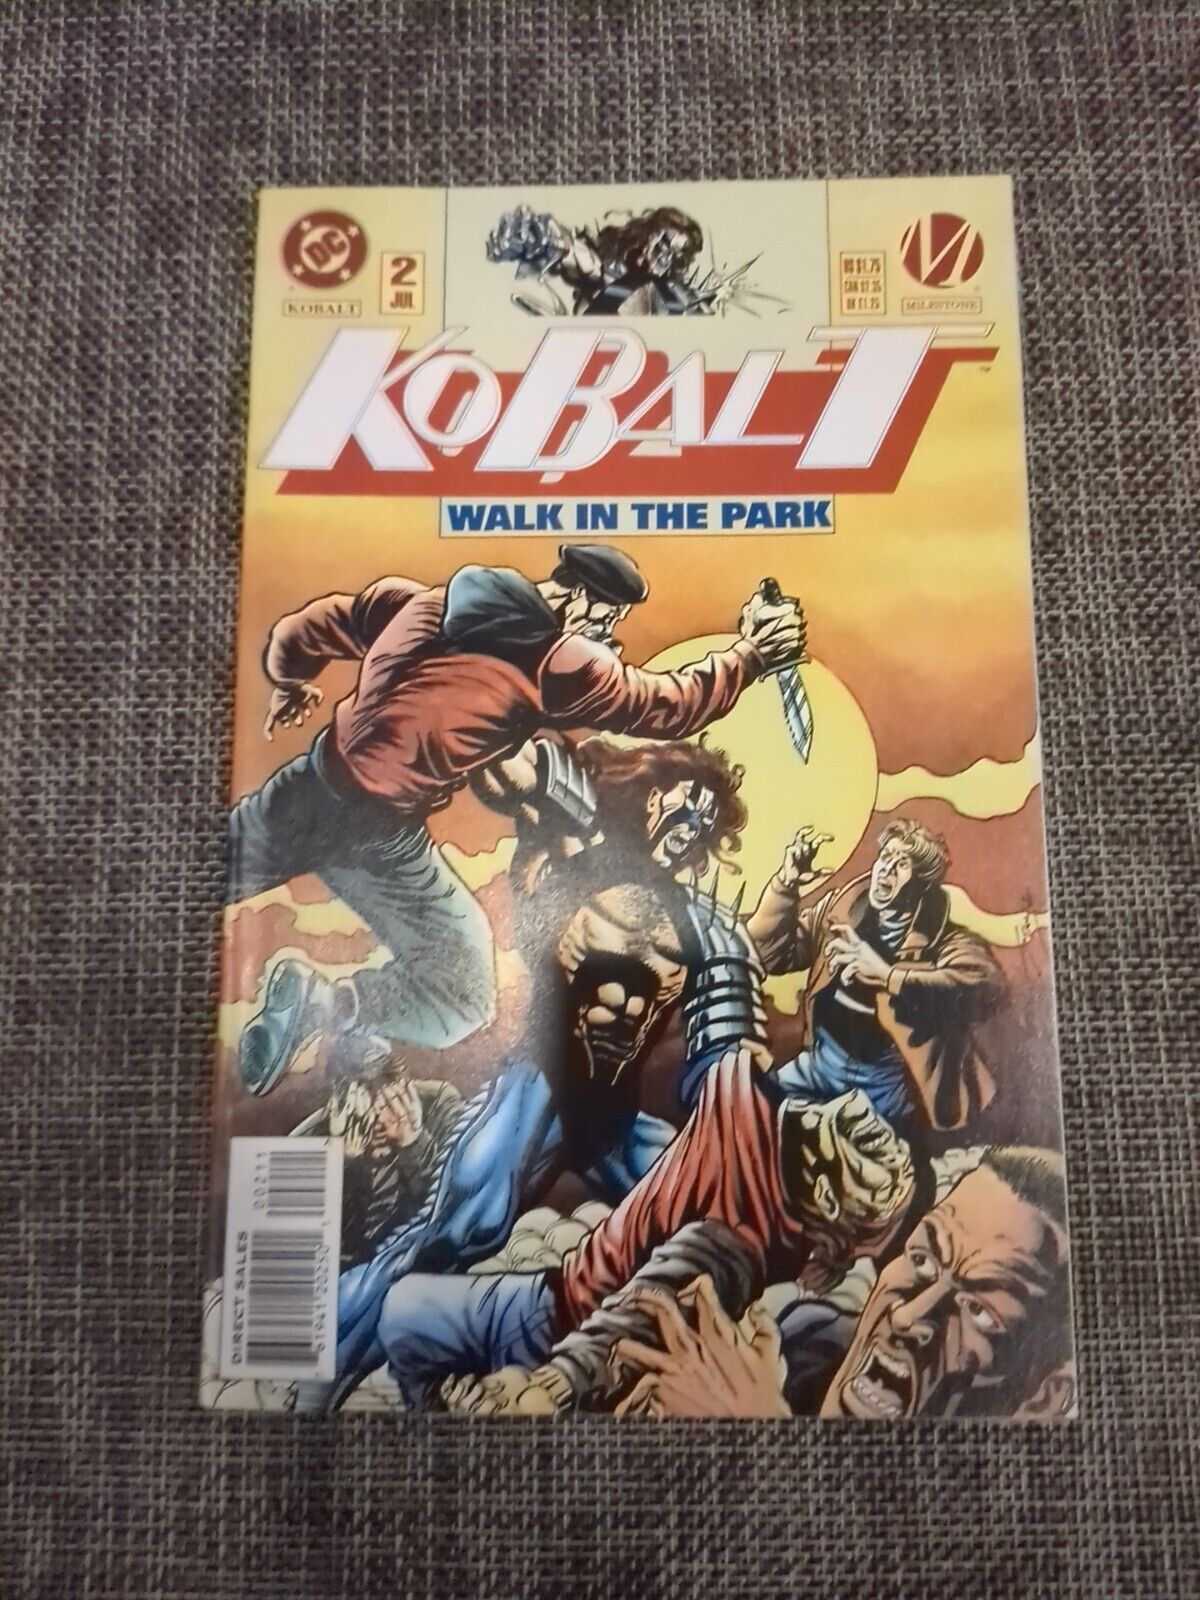 Kobalt #2 (DC Comics July 1994)